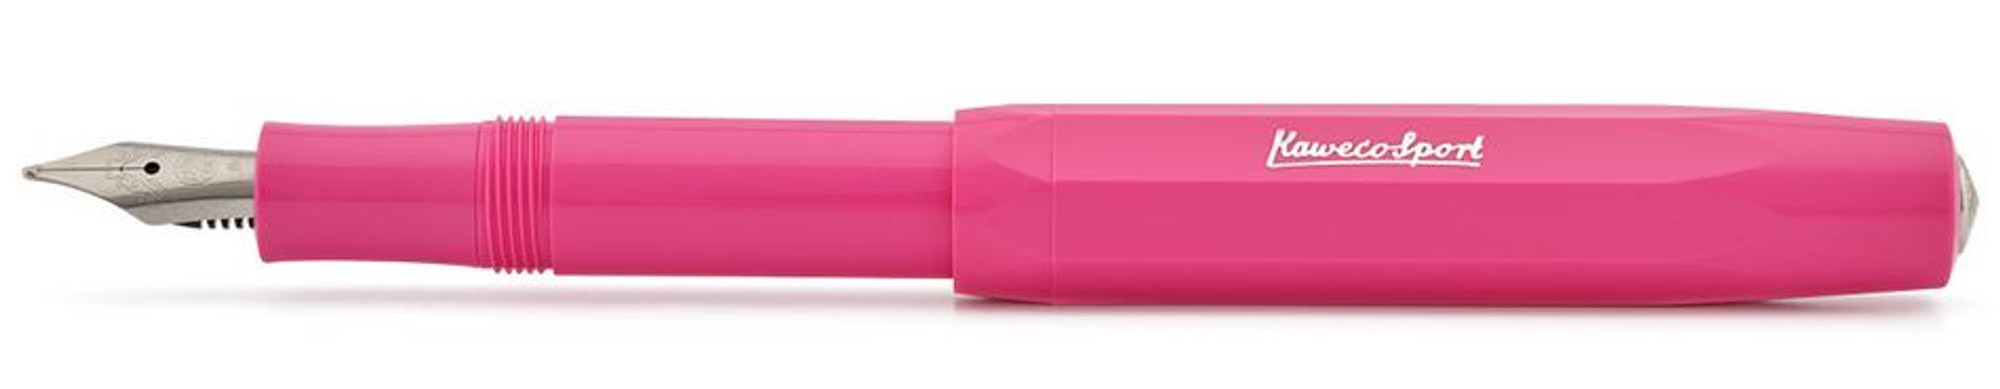 Kaweco Skyline Sport Fountain Pen Pink - Medium